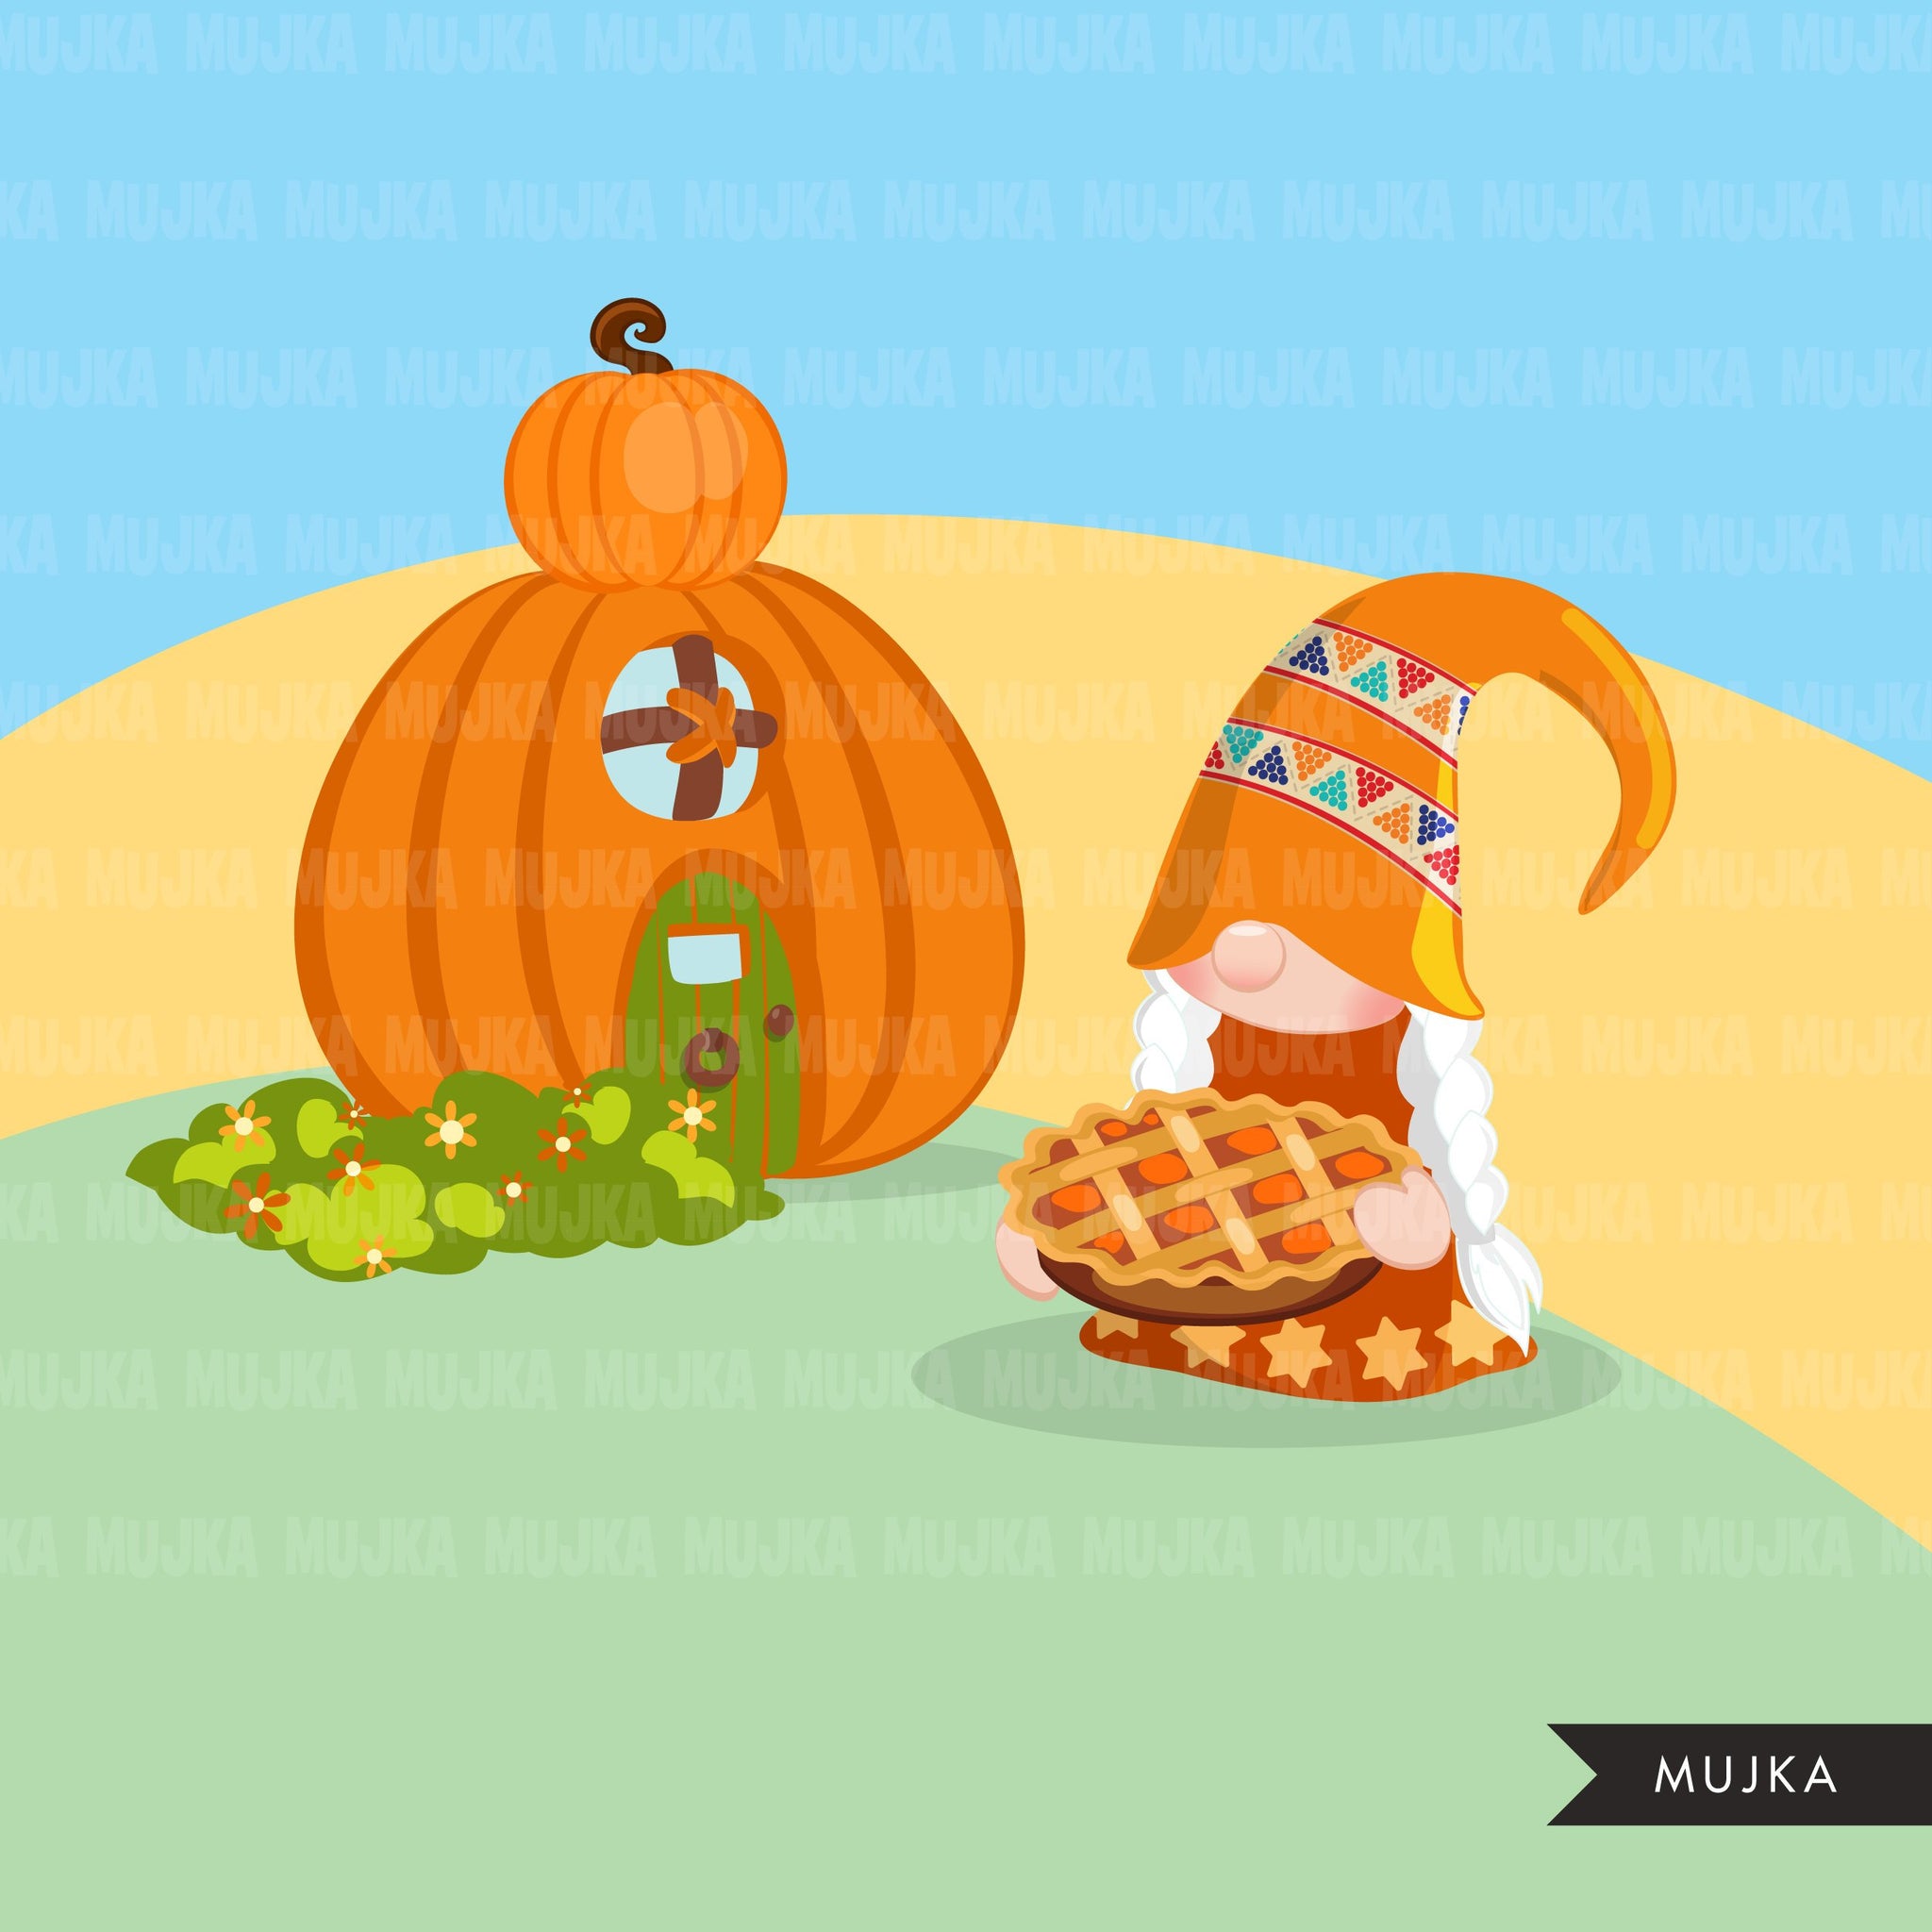 Thanksgiving gnomes Clipart, Scandinavian Gnome graphics, pumpkin, gobble gobble cute characters clip art